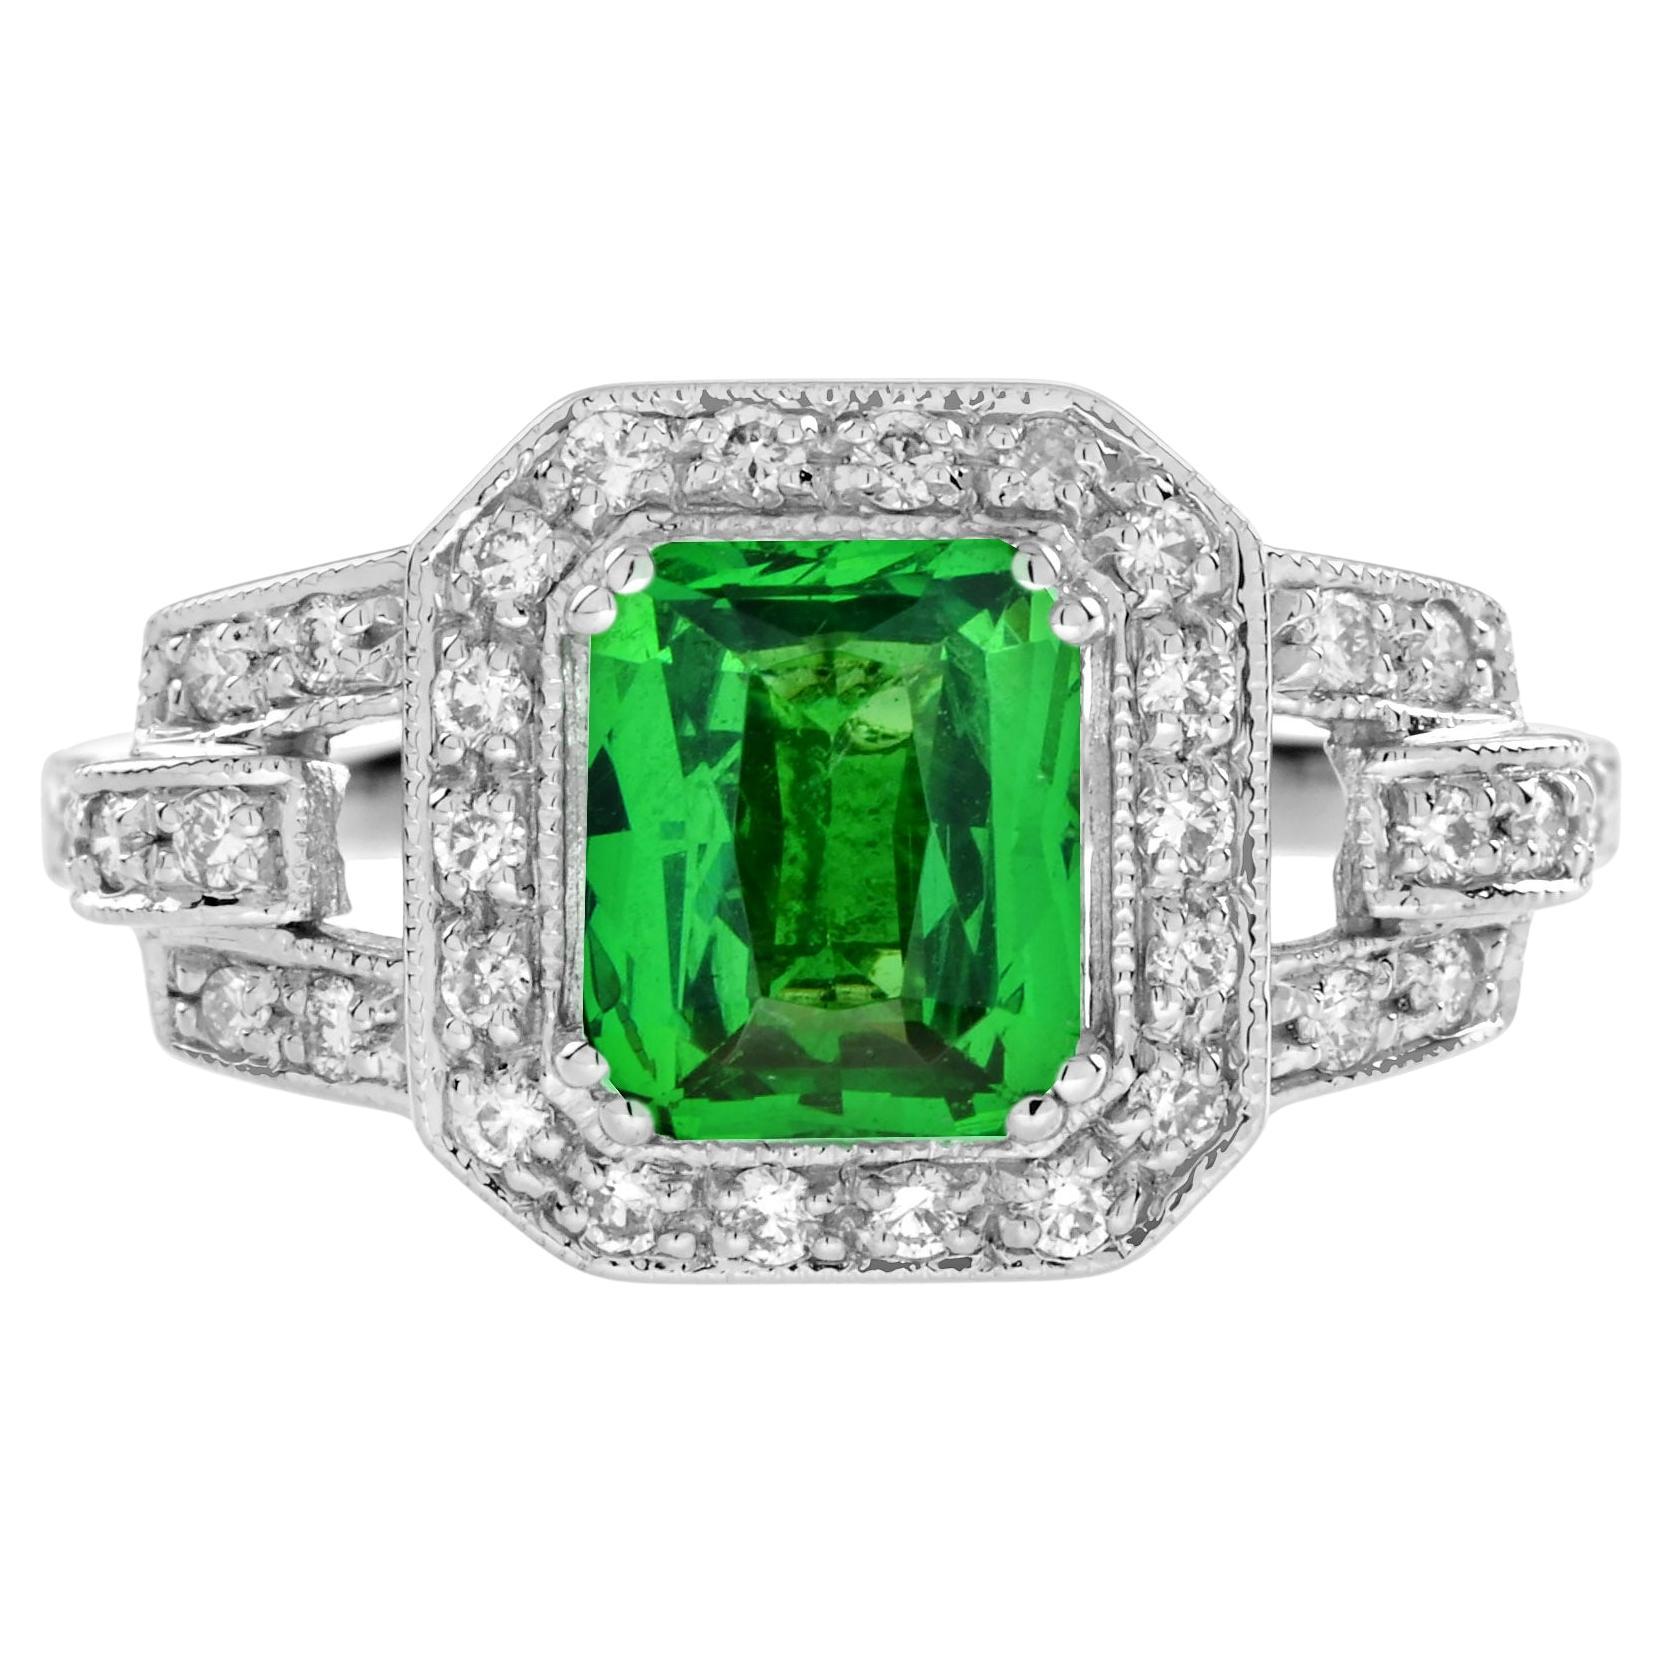 Tsavorite and Diamond Art Deco Style Engagement Ring in 18K White Gold